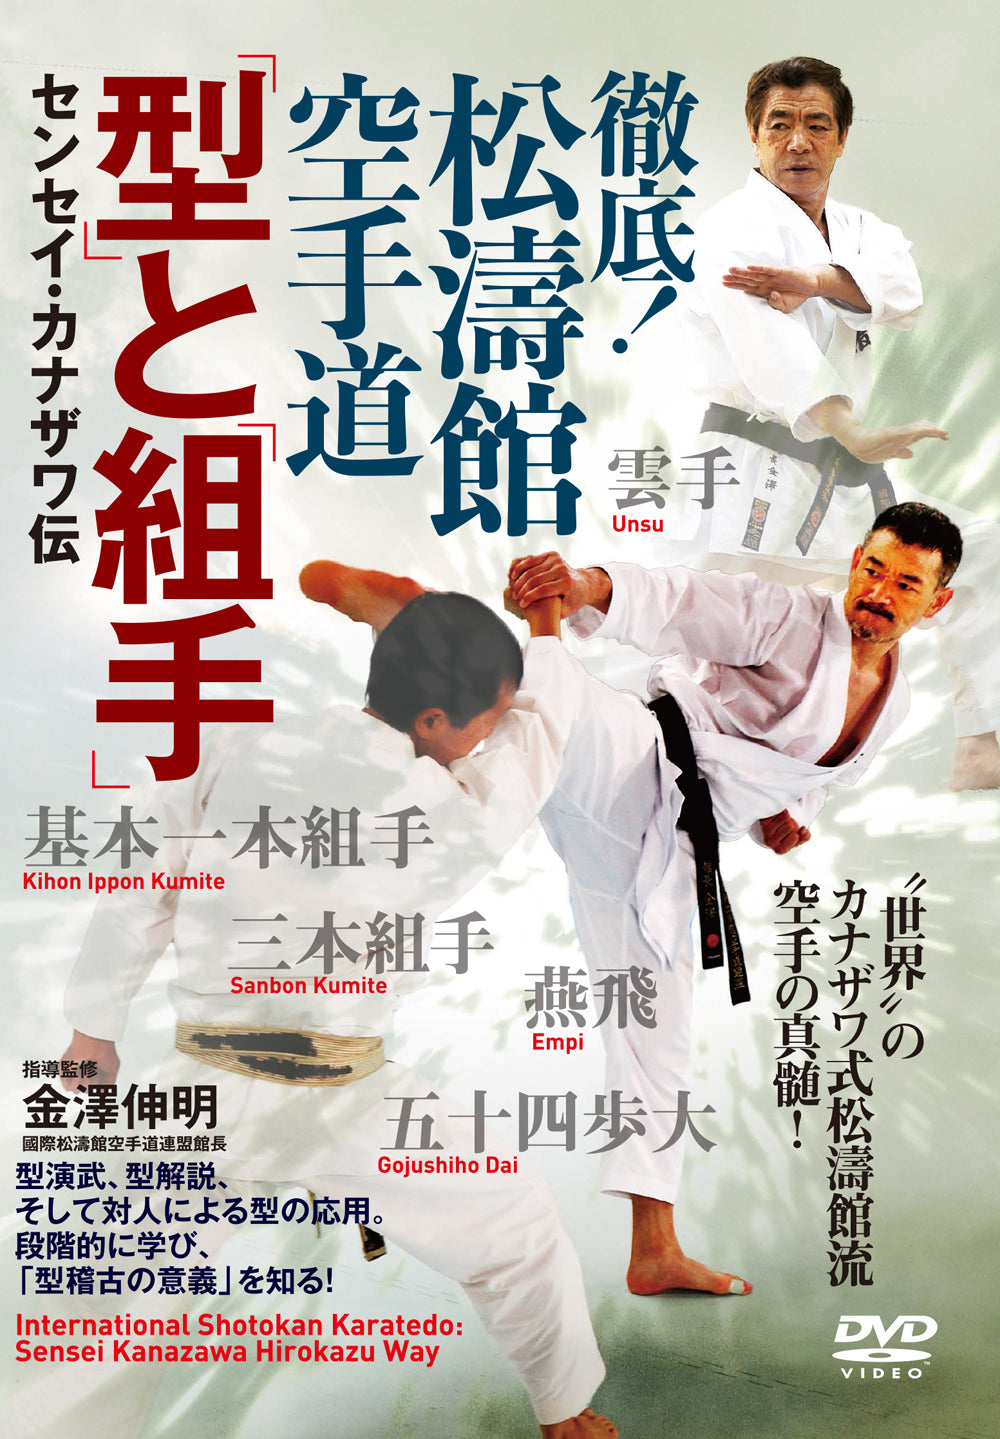 International Shotokan Karatedo: The Hirokazu Kanazawa Way DVD by Nobuaki Kanazawa